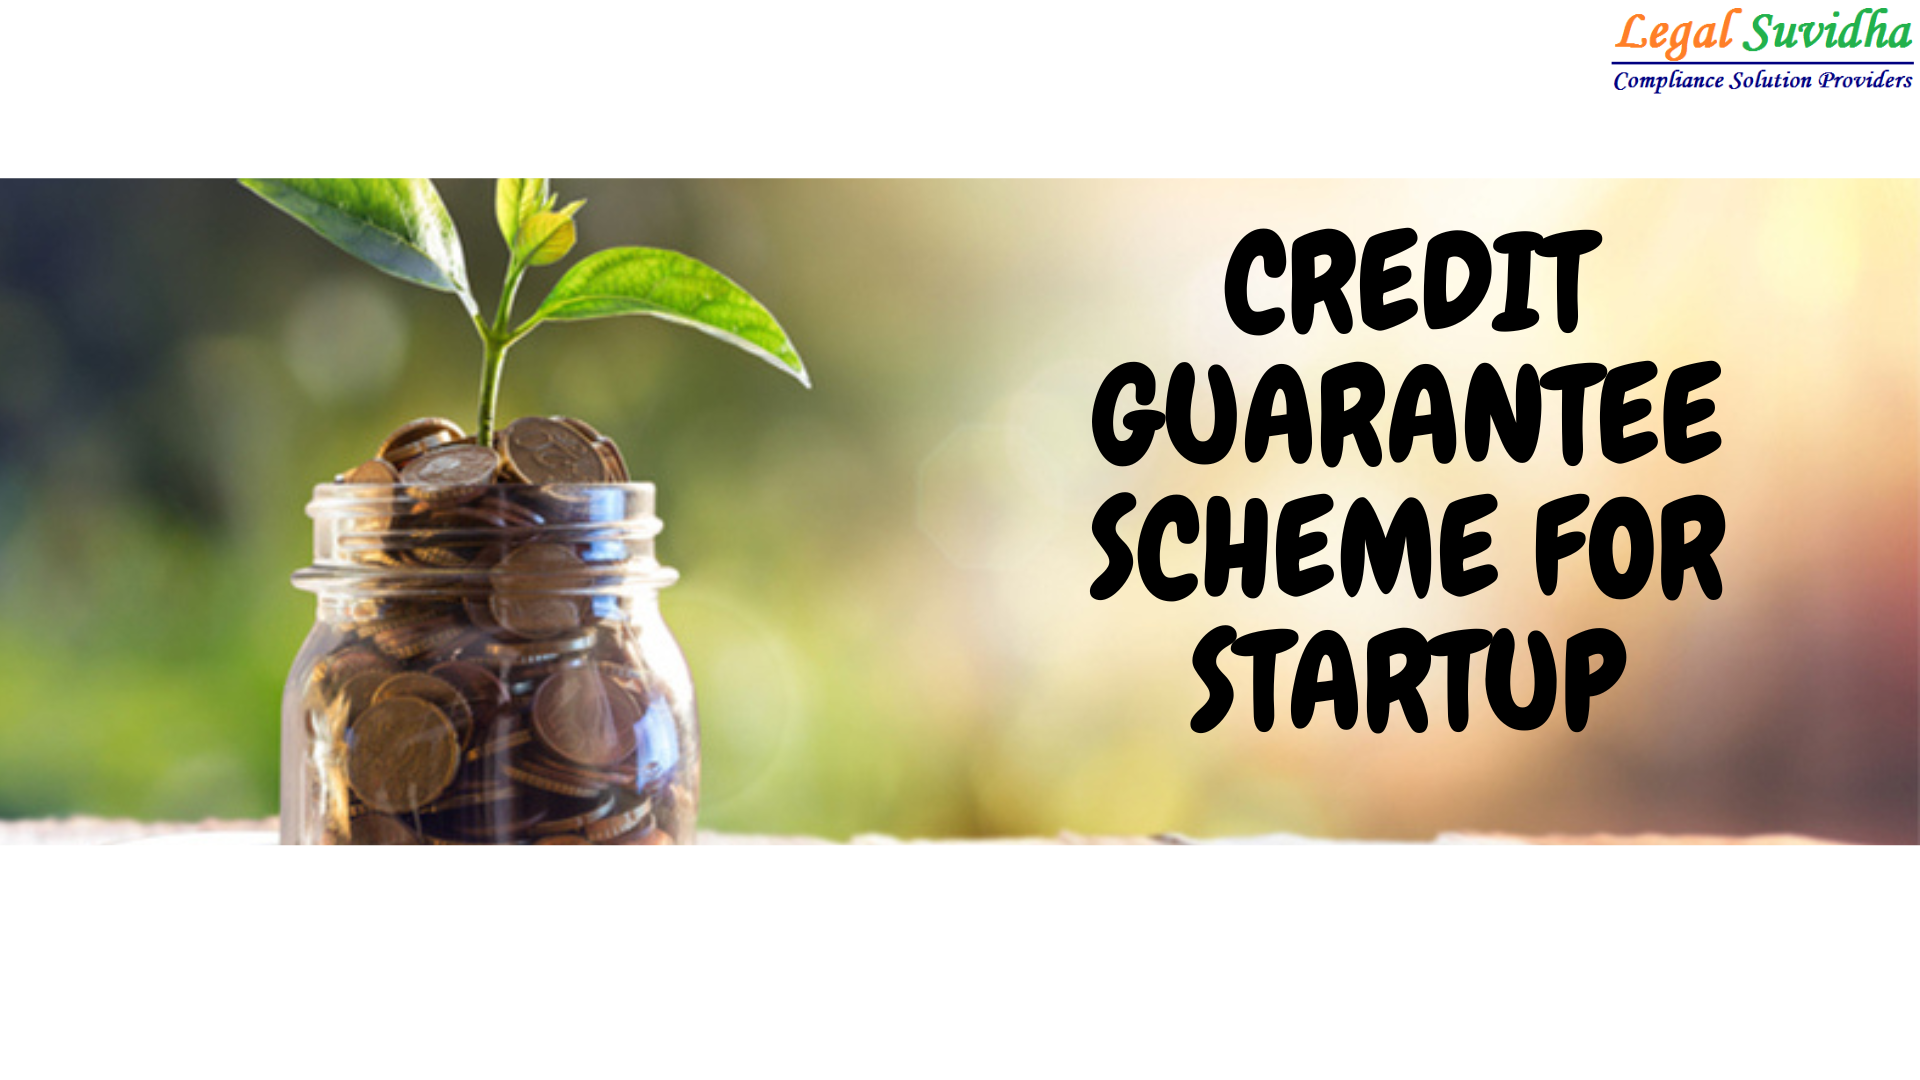 Credit Guarantee for Startups